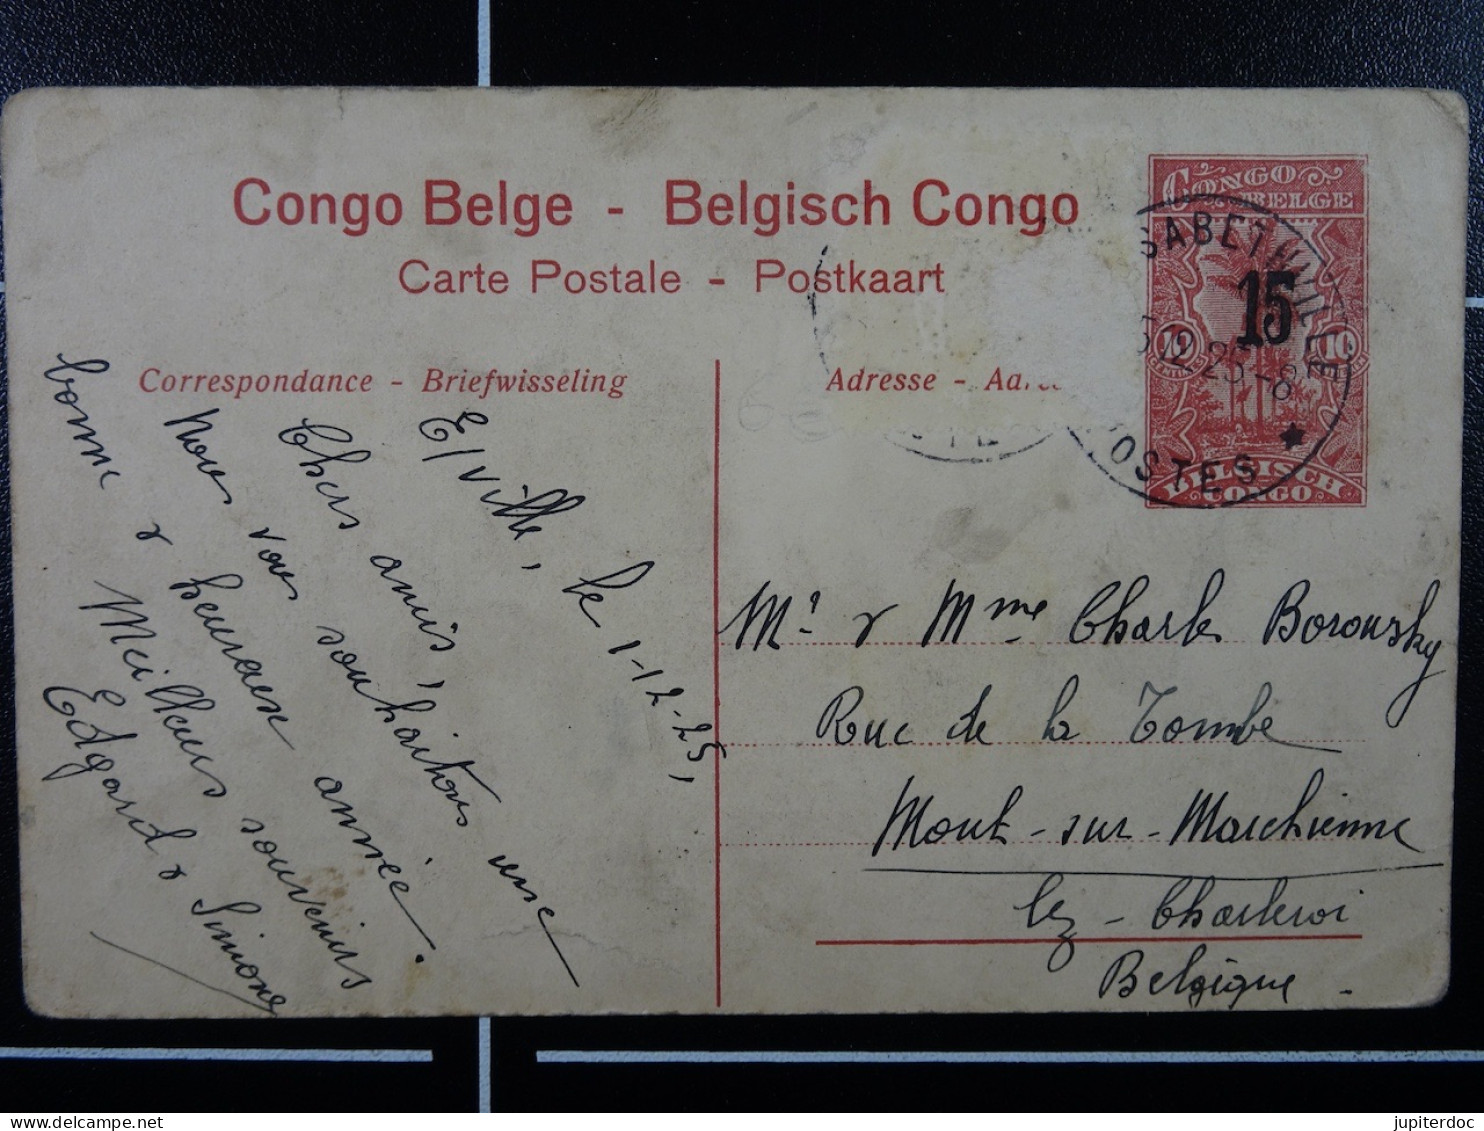 Congo Belge Un Coin De Forêt Du Maymbe - Belgian Congo